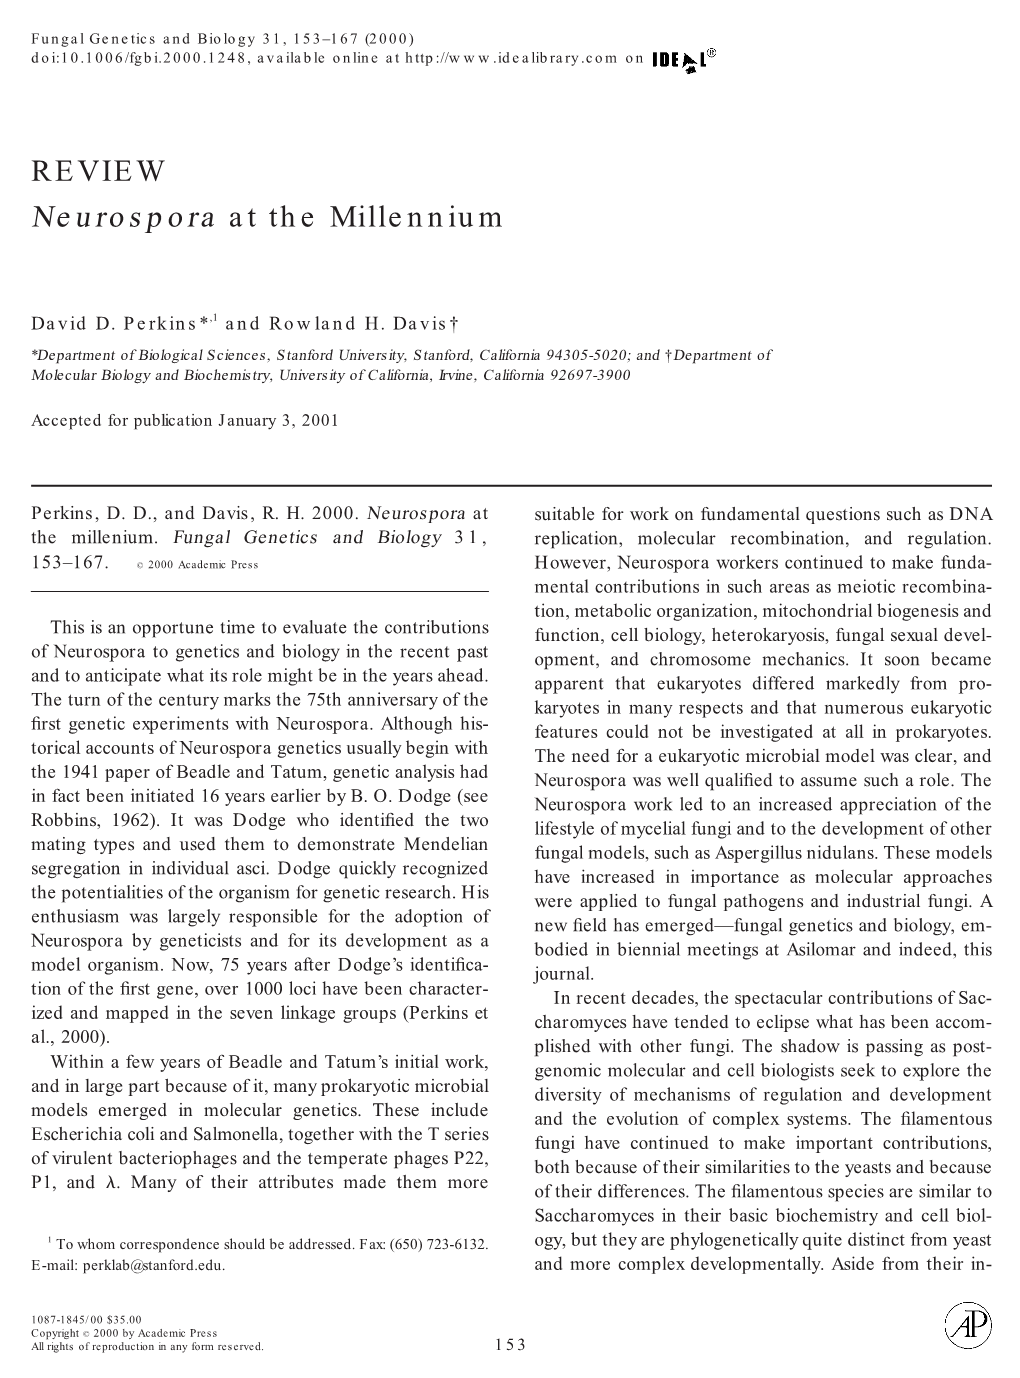 Neurospora at the Millennium